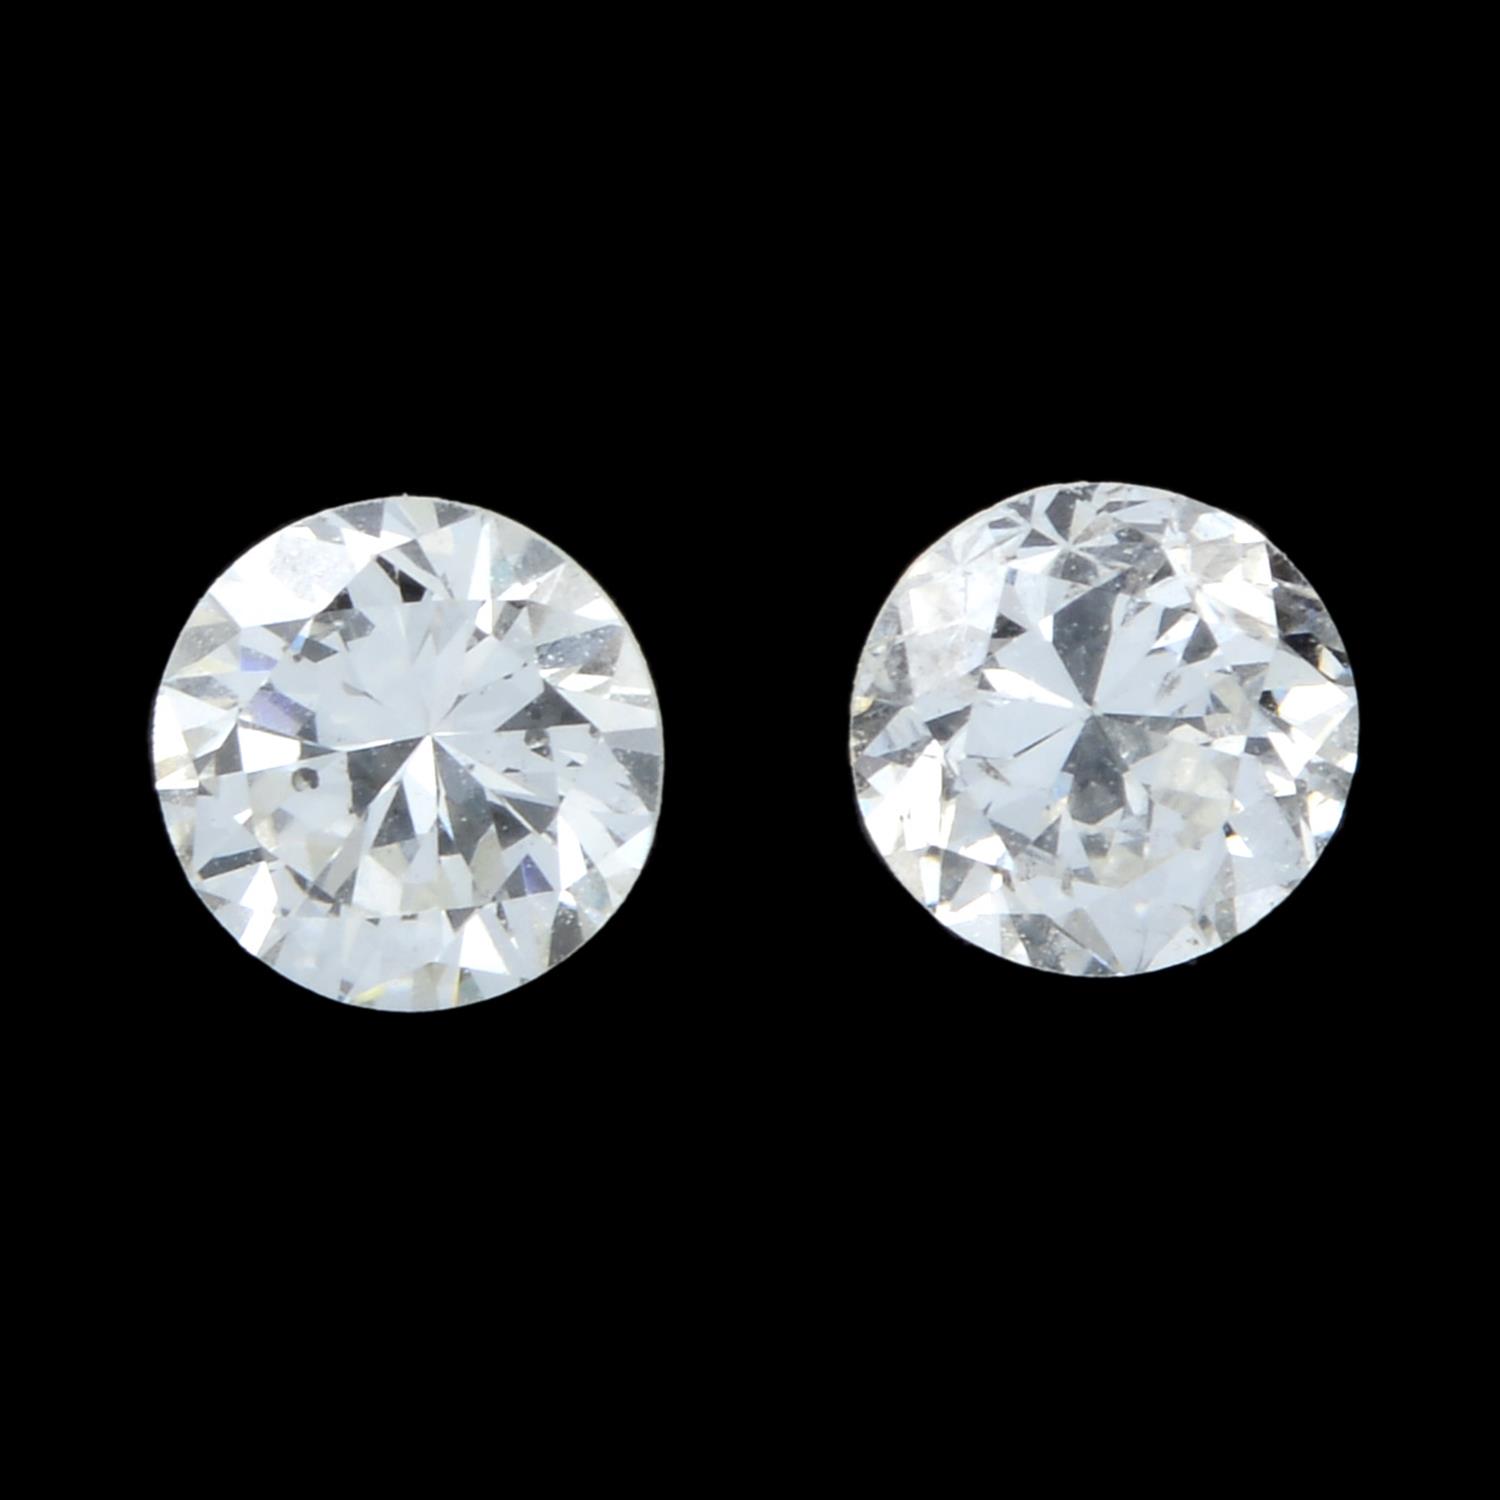 Pair of brilliant cut diamonds weighing 0.48ct